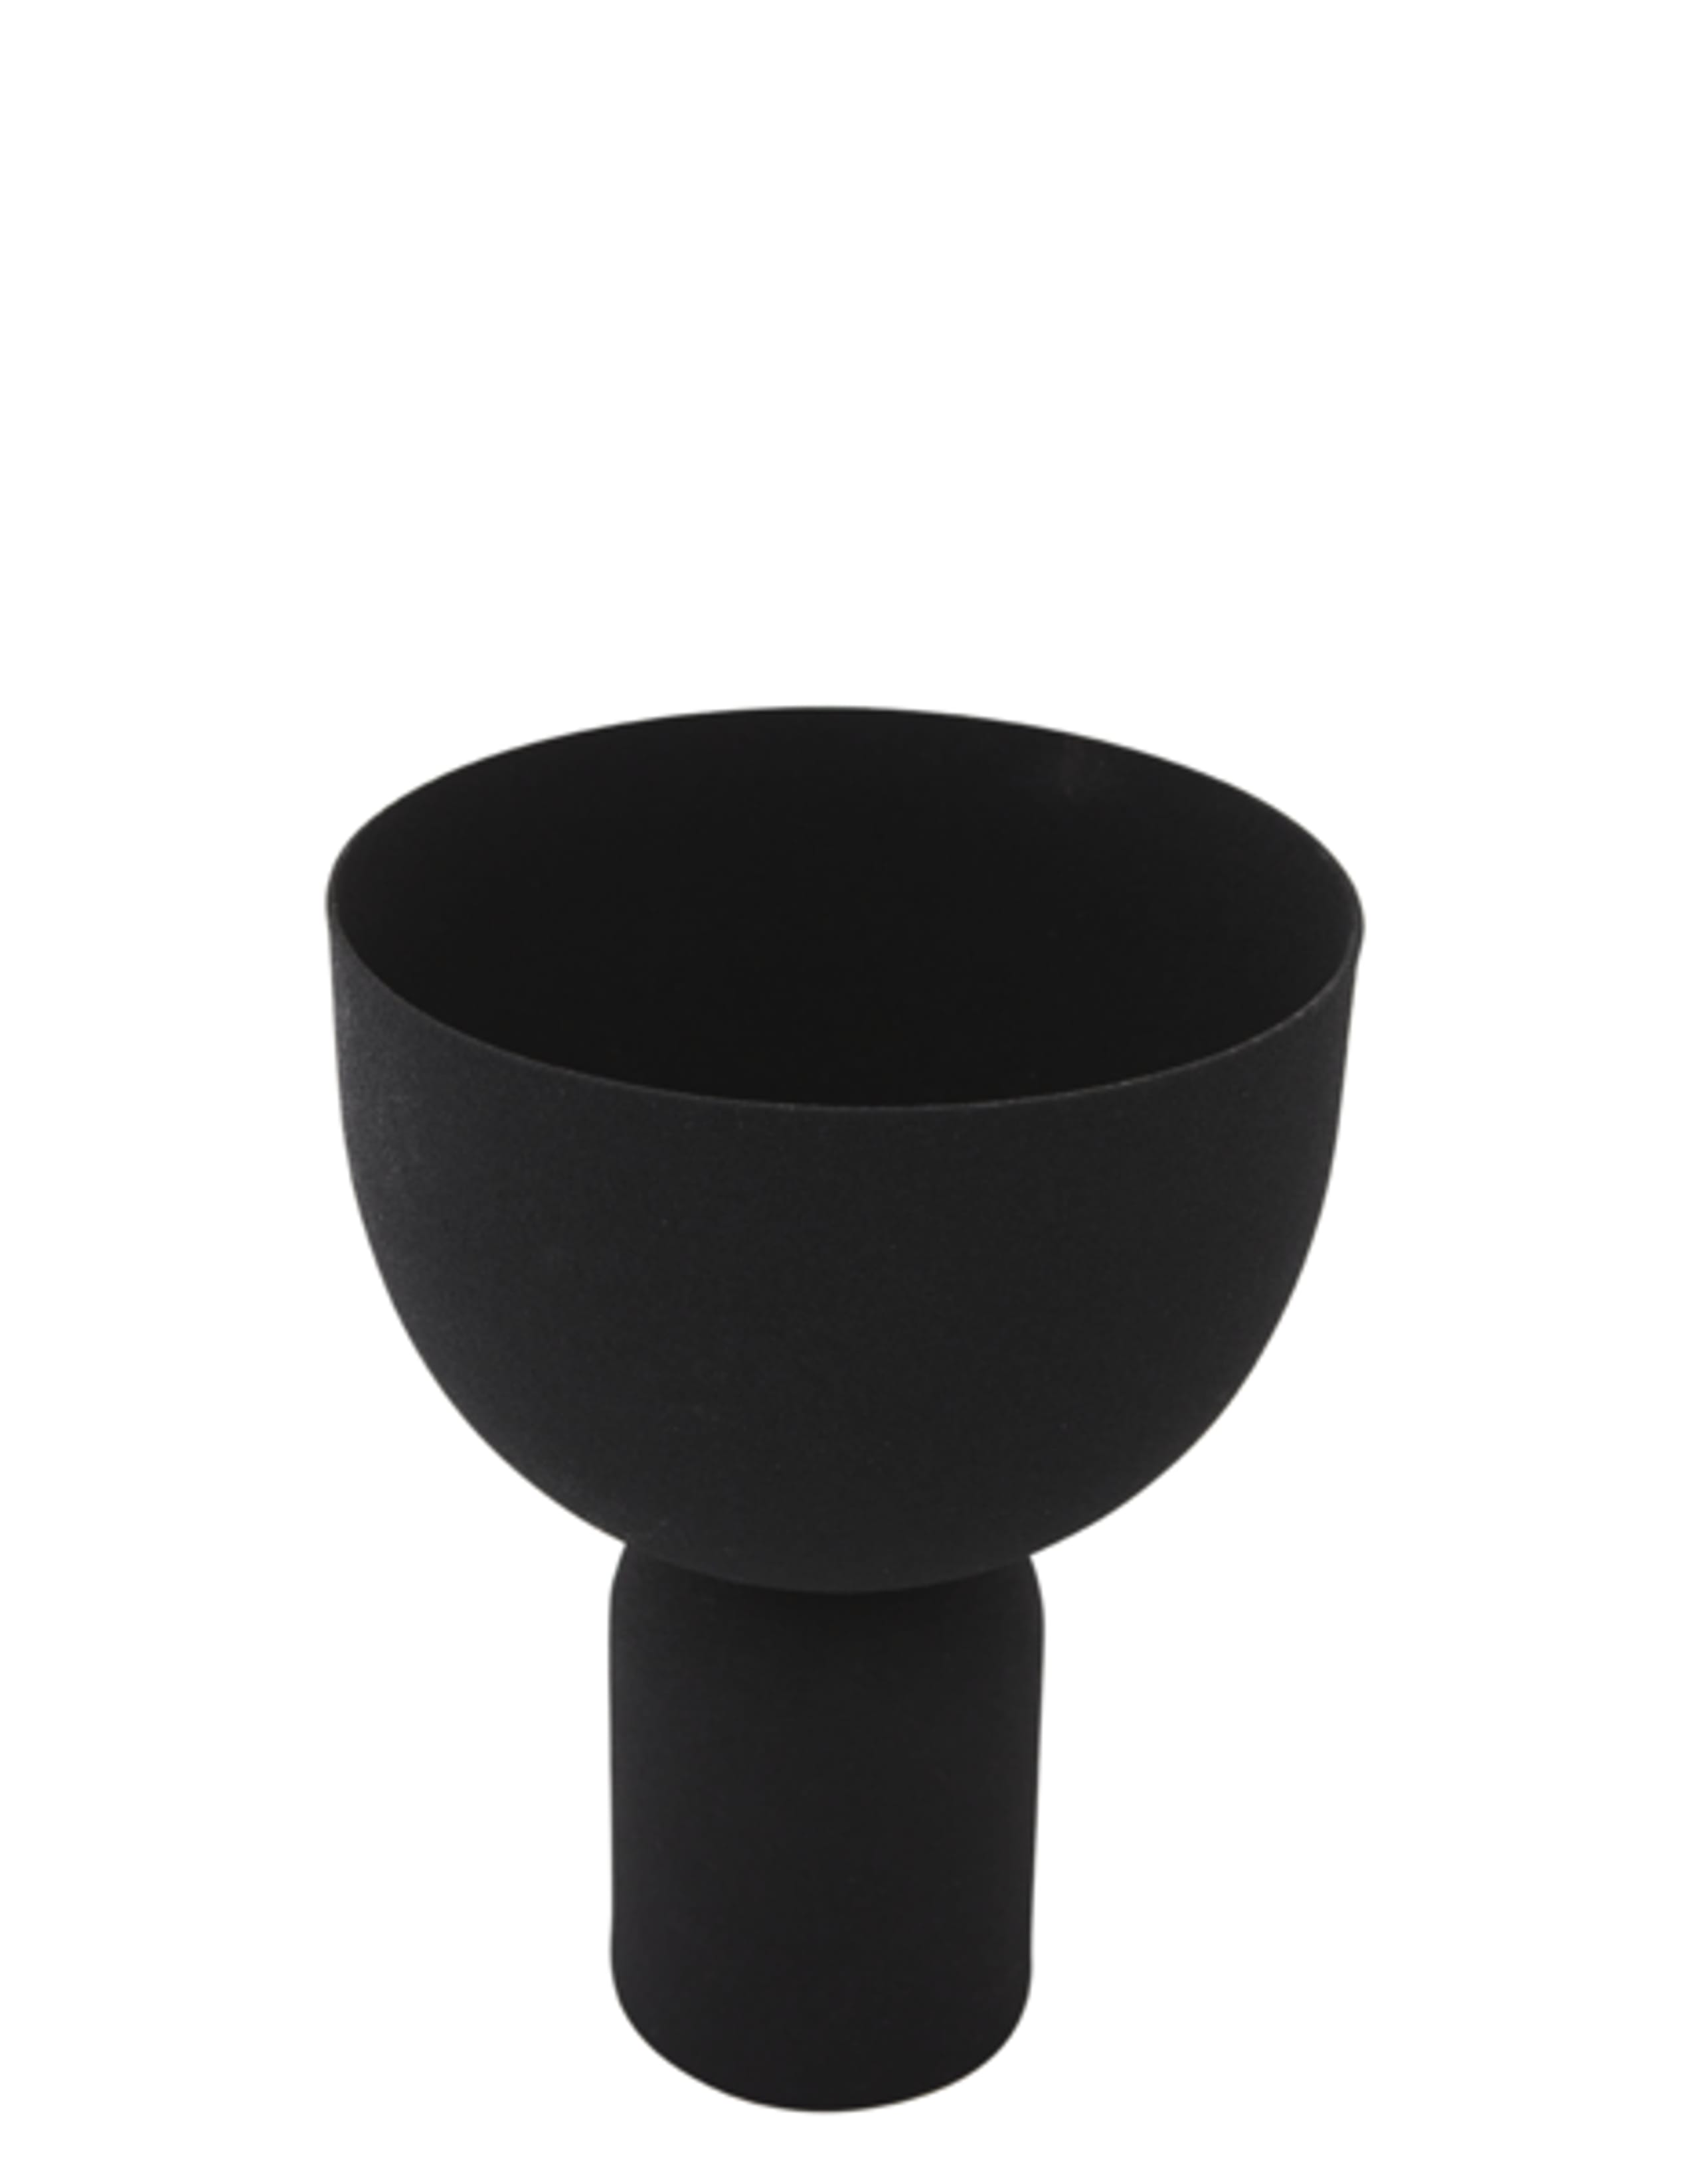 AYTM - Vase - Torus Flowerpot - Black - Large